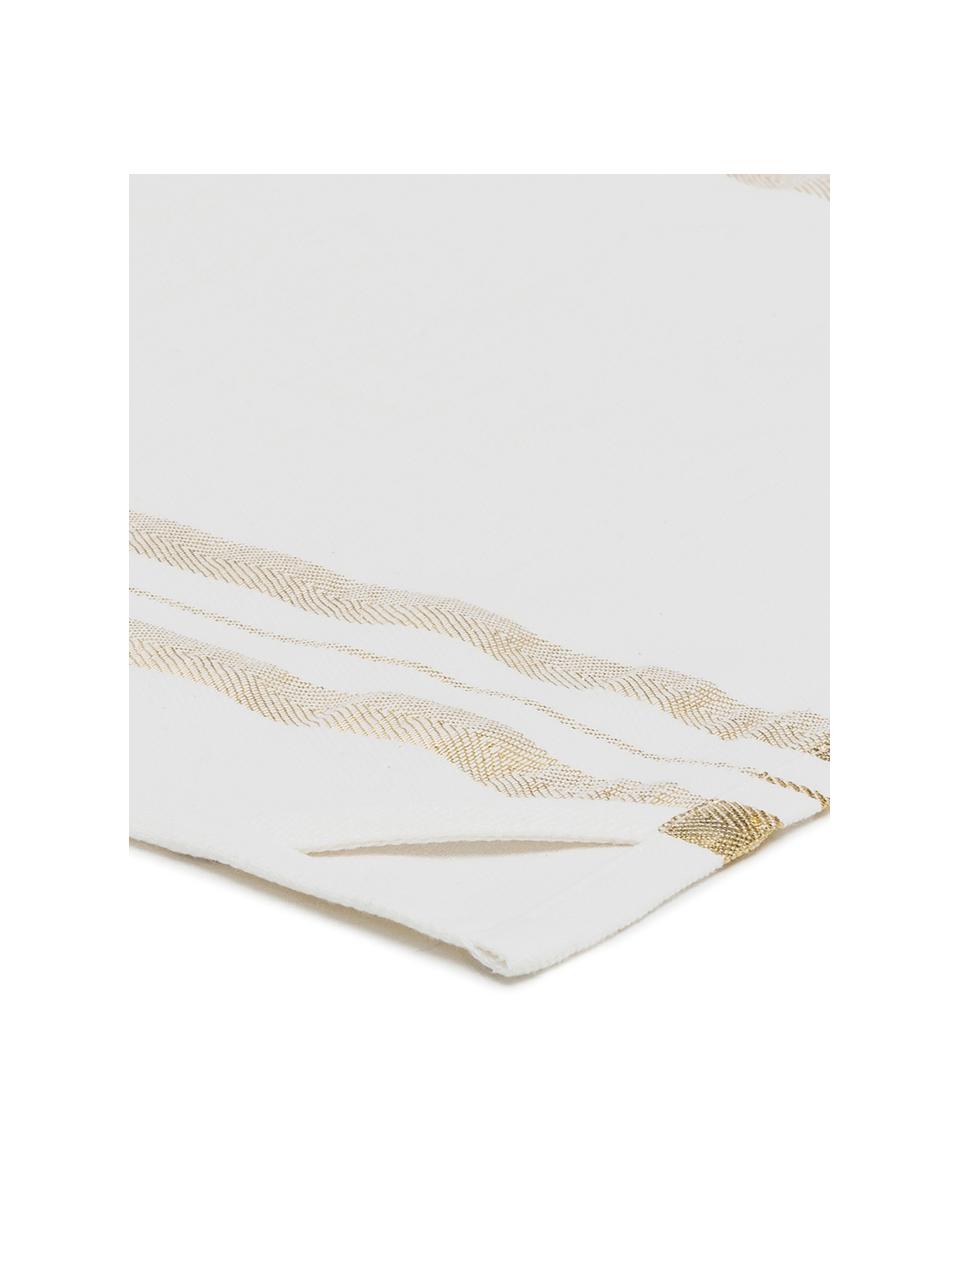 Theedoek Corinne met goudkleurige details, Katoen, Wit, goudkleurig, 50 x 70 cm